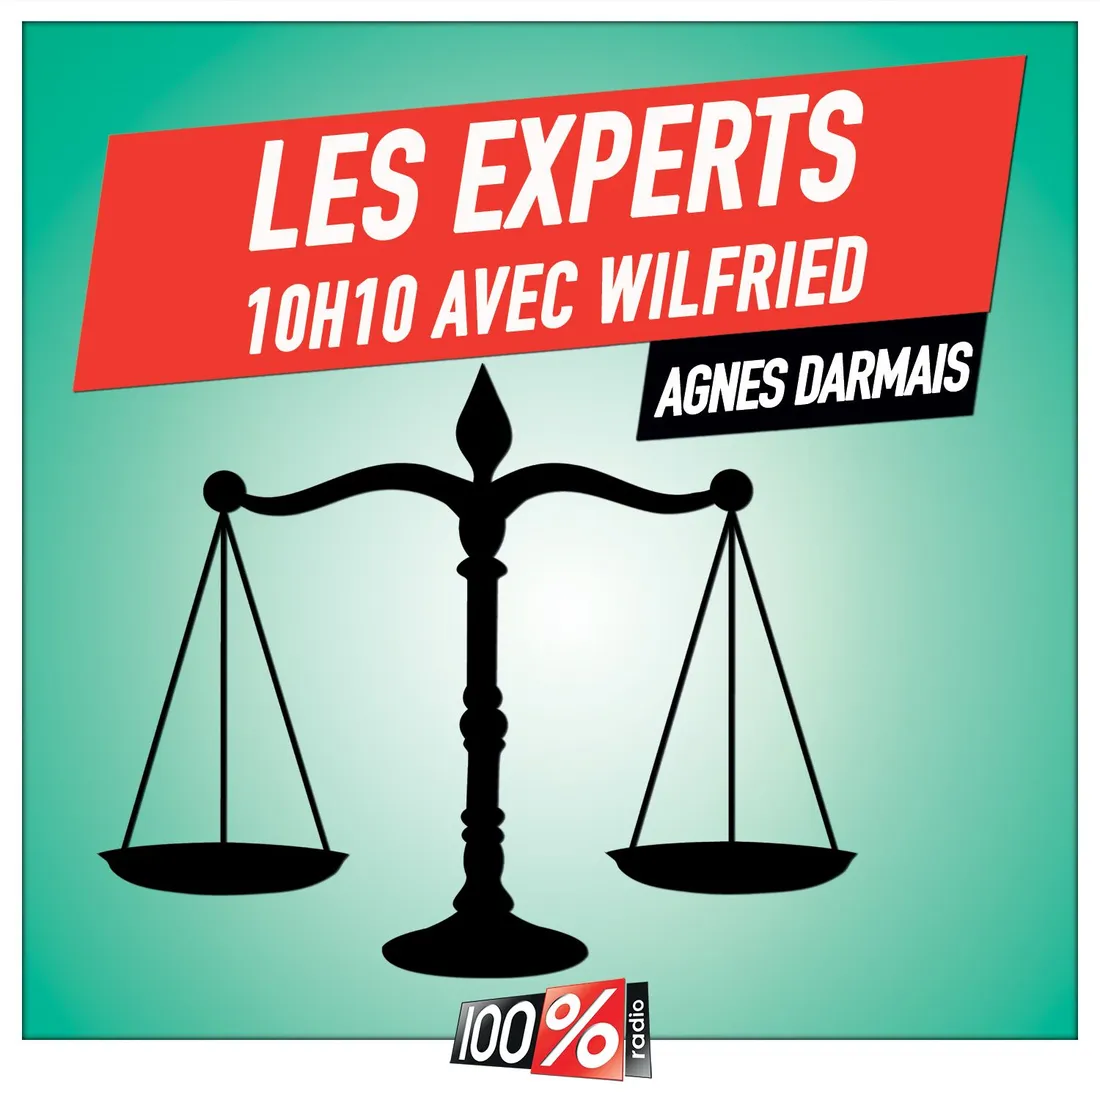 Les experts de Wilfried, Agnes Darmais